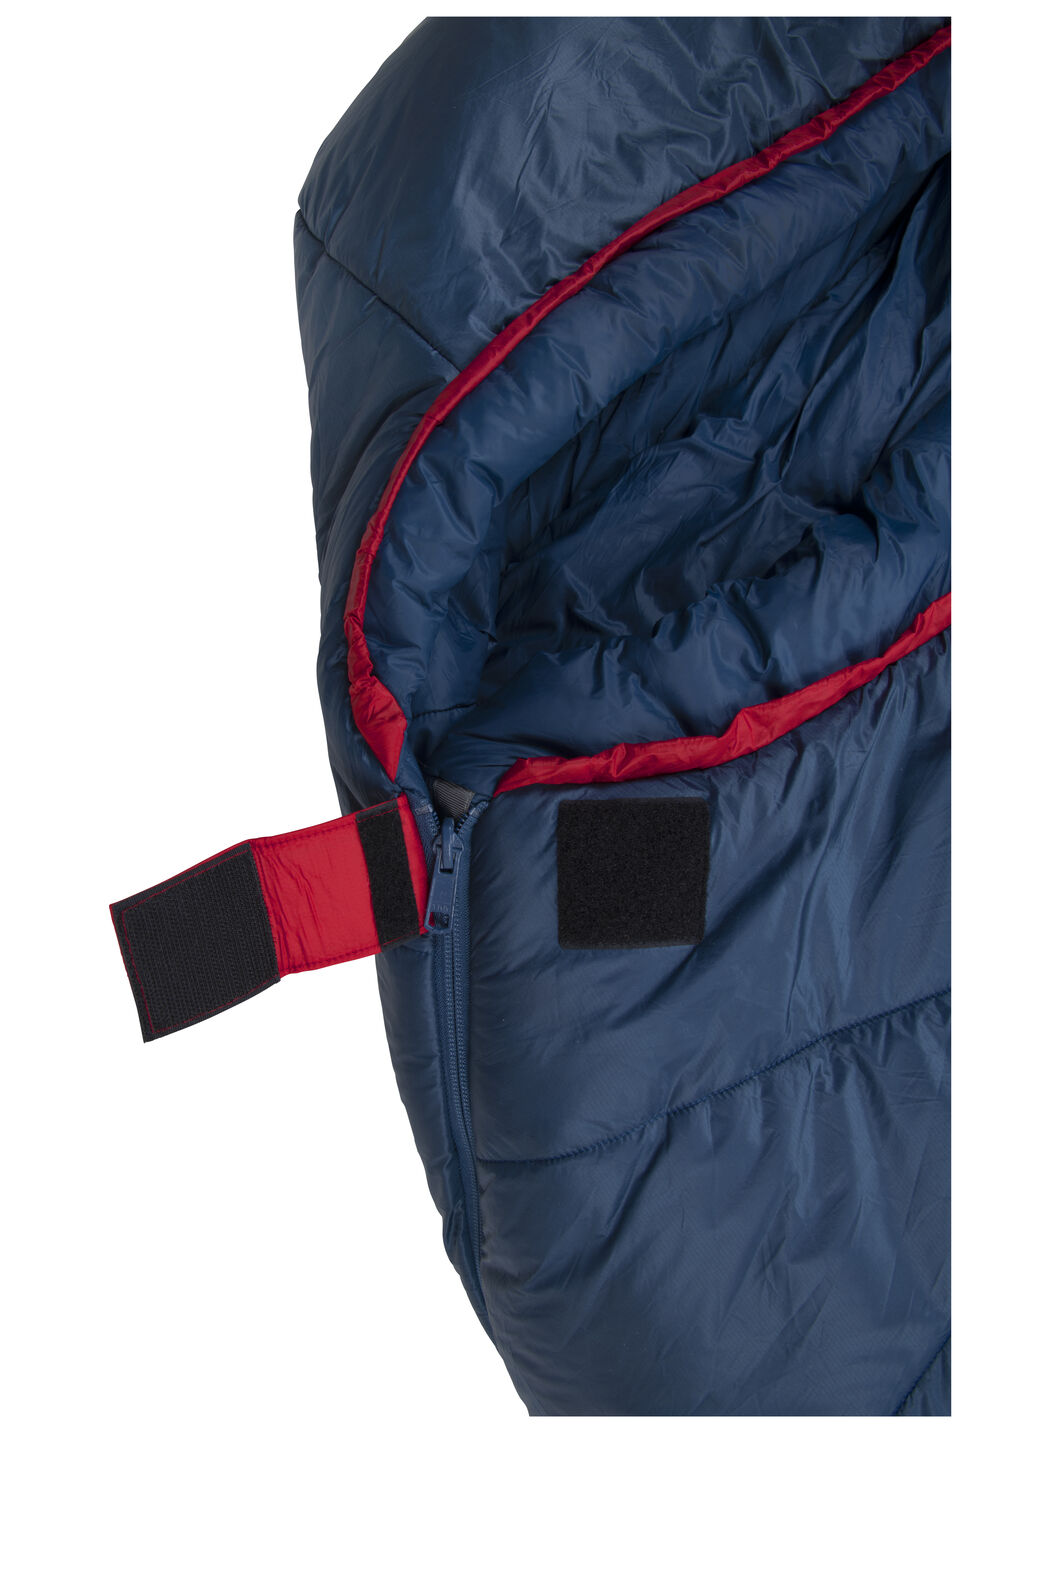 Macpac Aspire 360 Sleeping Bag — Standard | Macpac